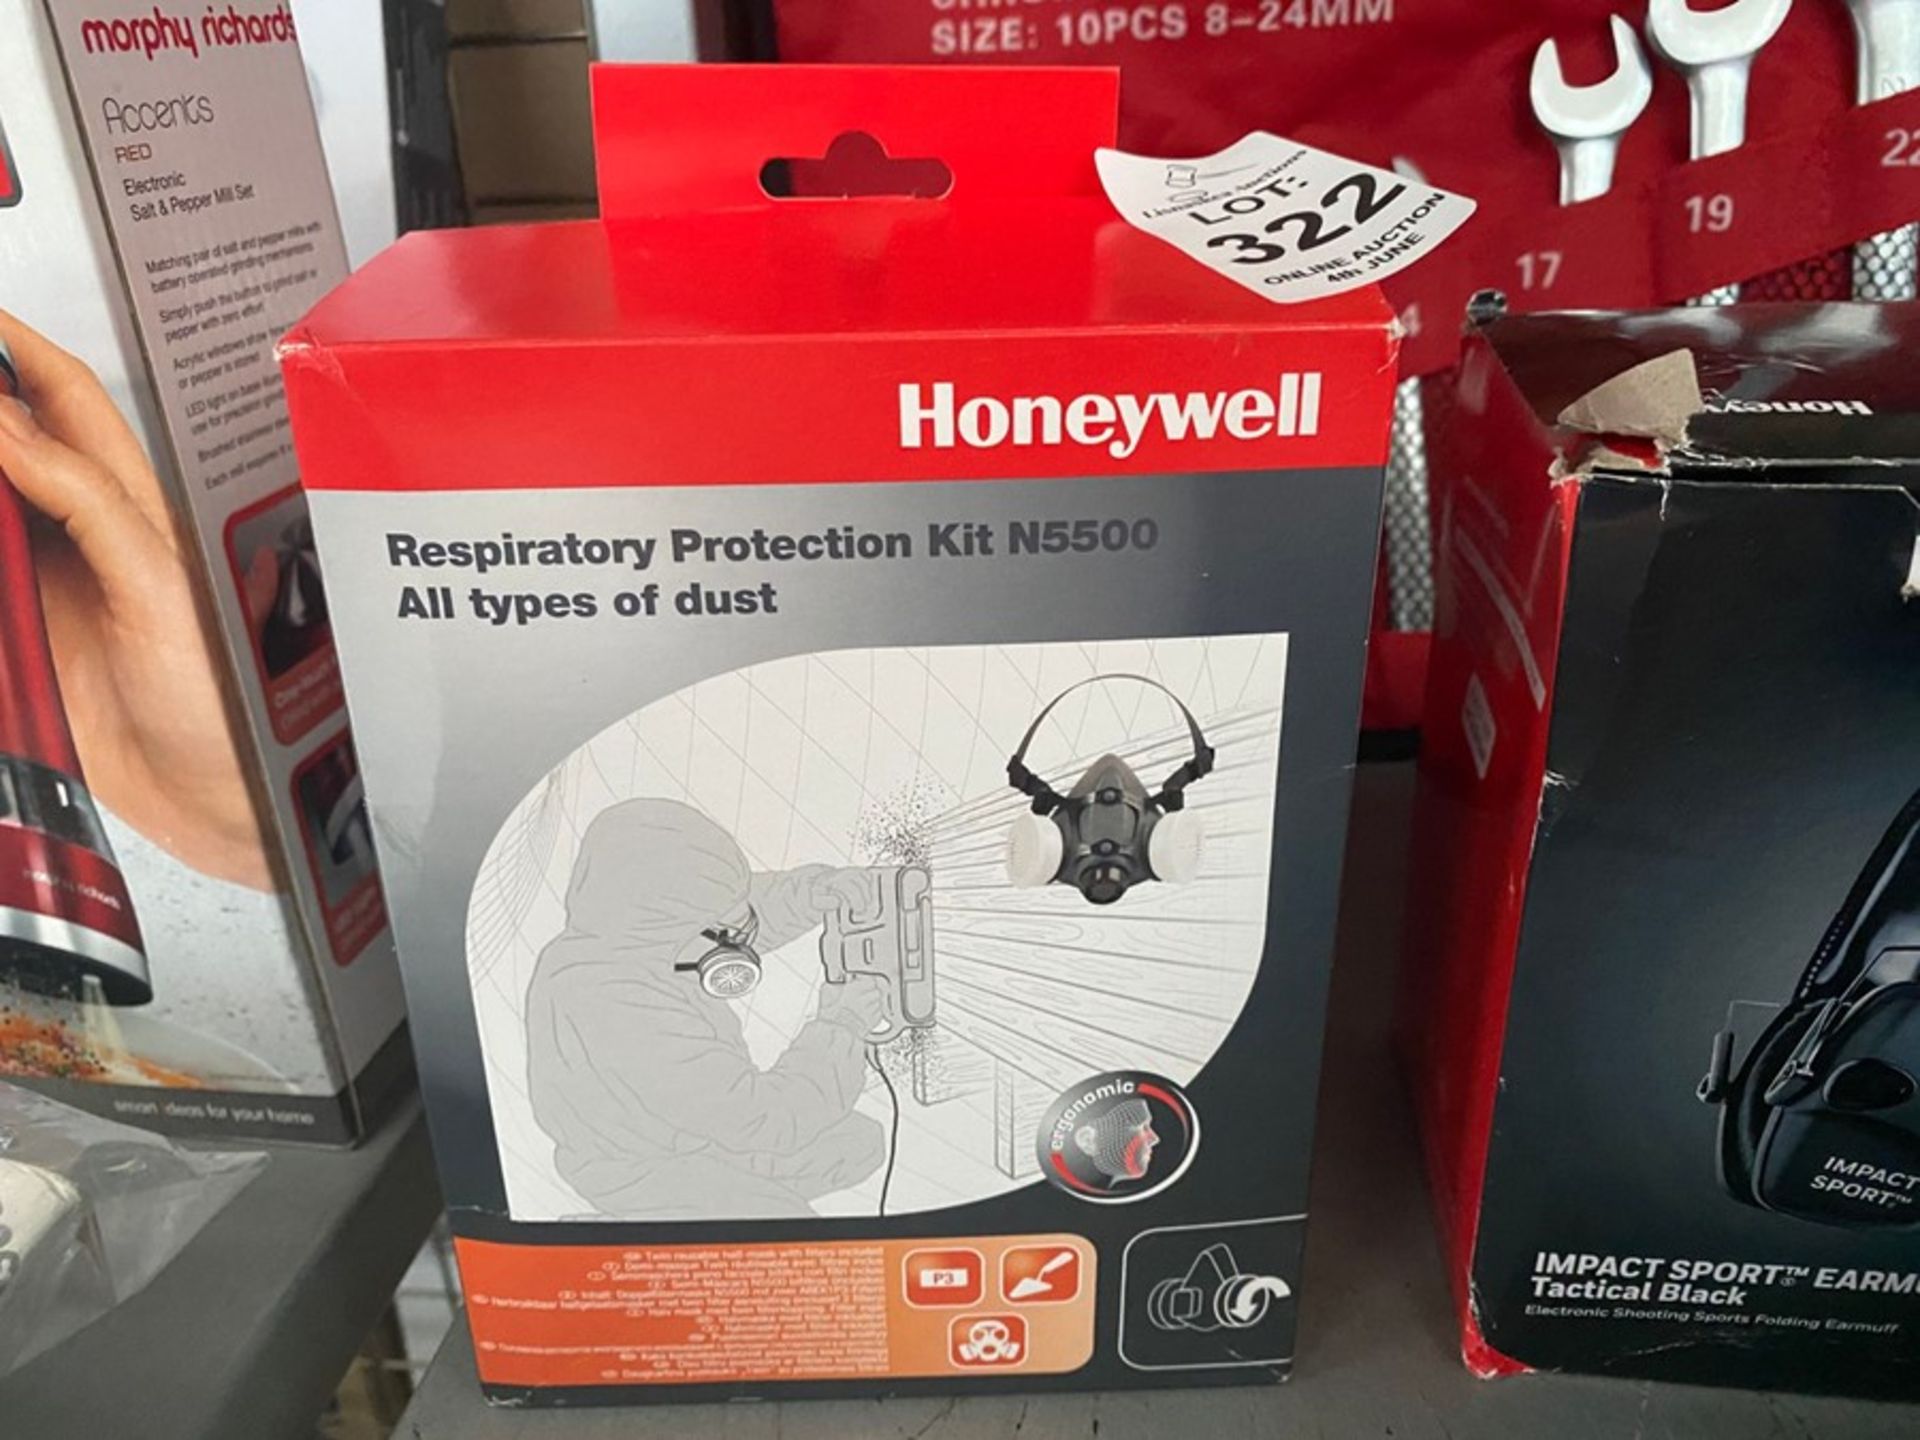 HONEYWELL RESPIRATORY PROTECTION KIT N5500 DUST MASK